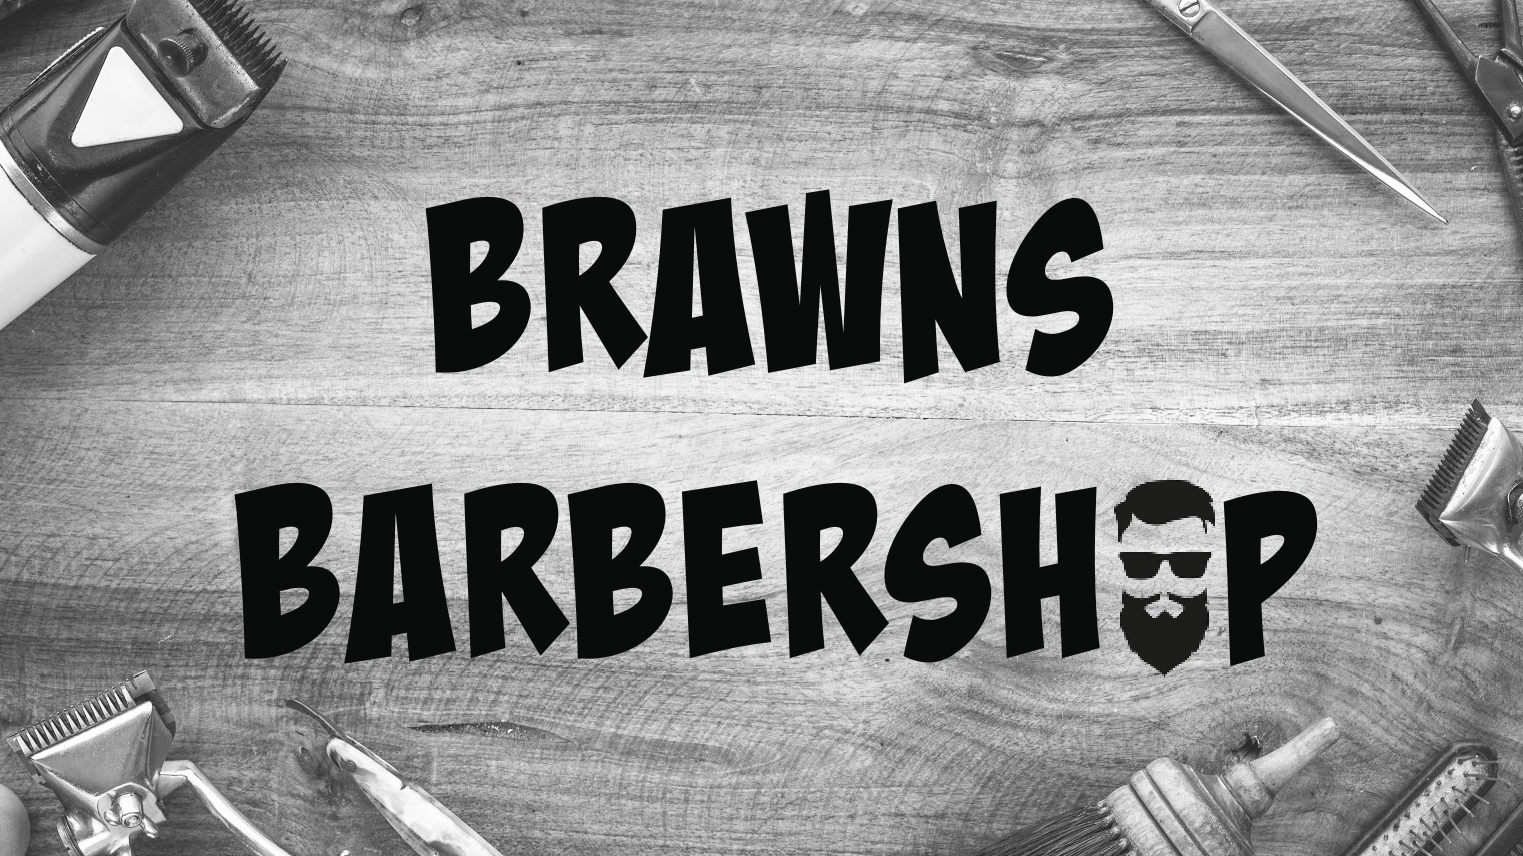 Brawns Barbershop